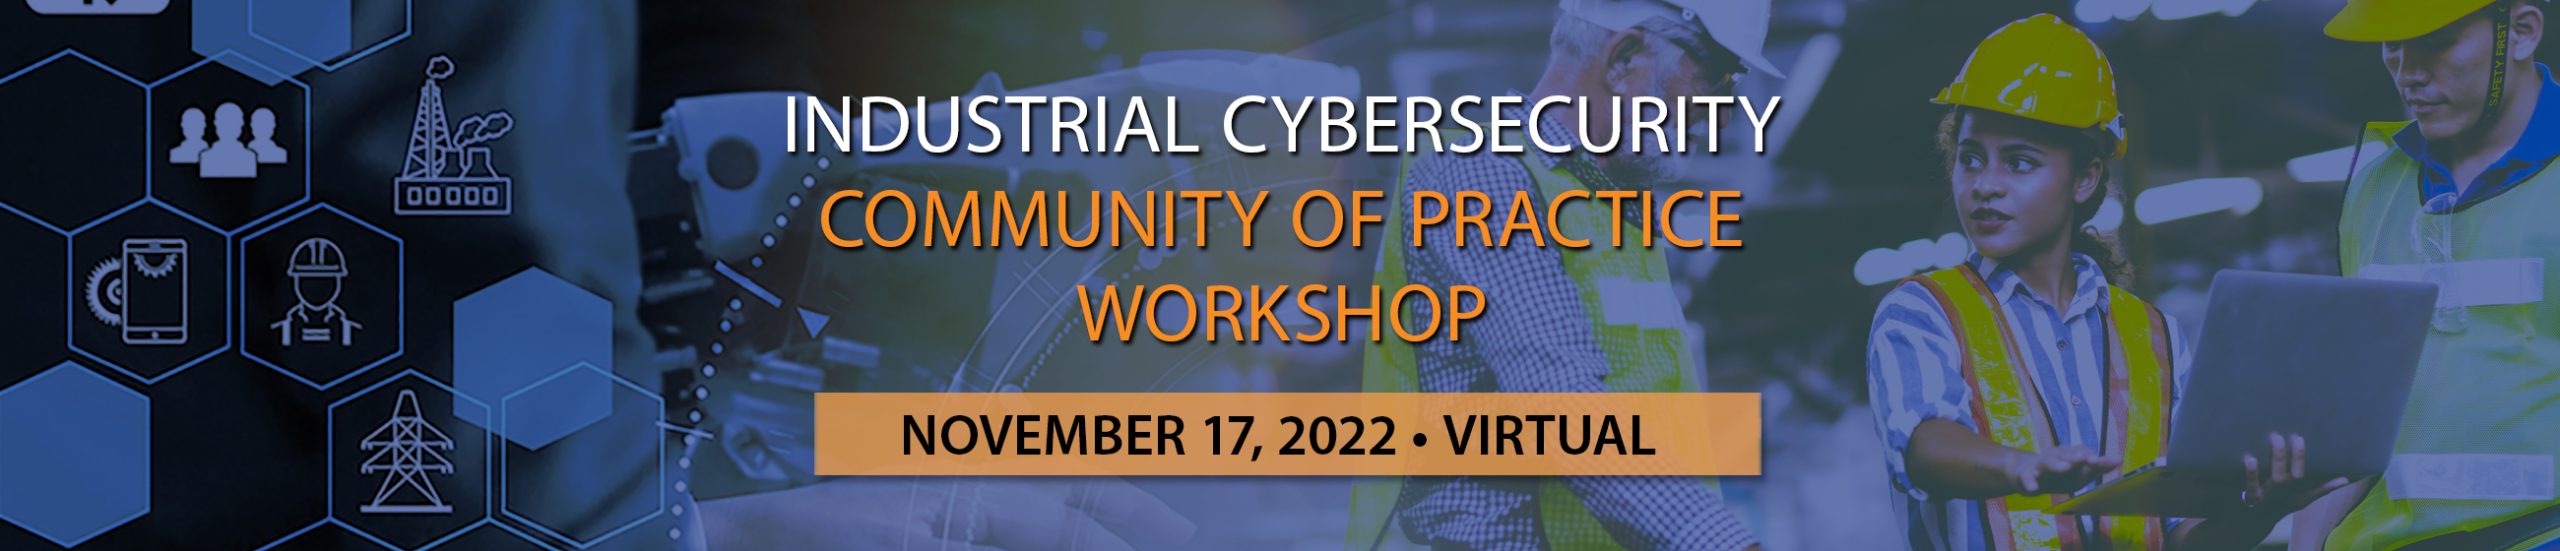 industrial cybersecurity community of practice workshop 2022